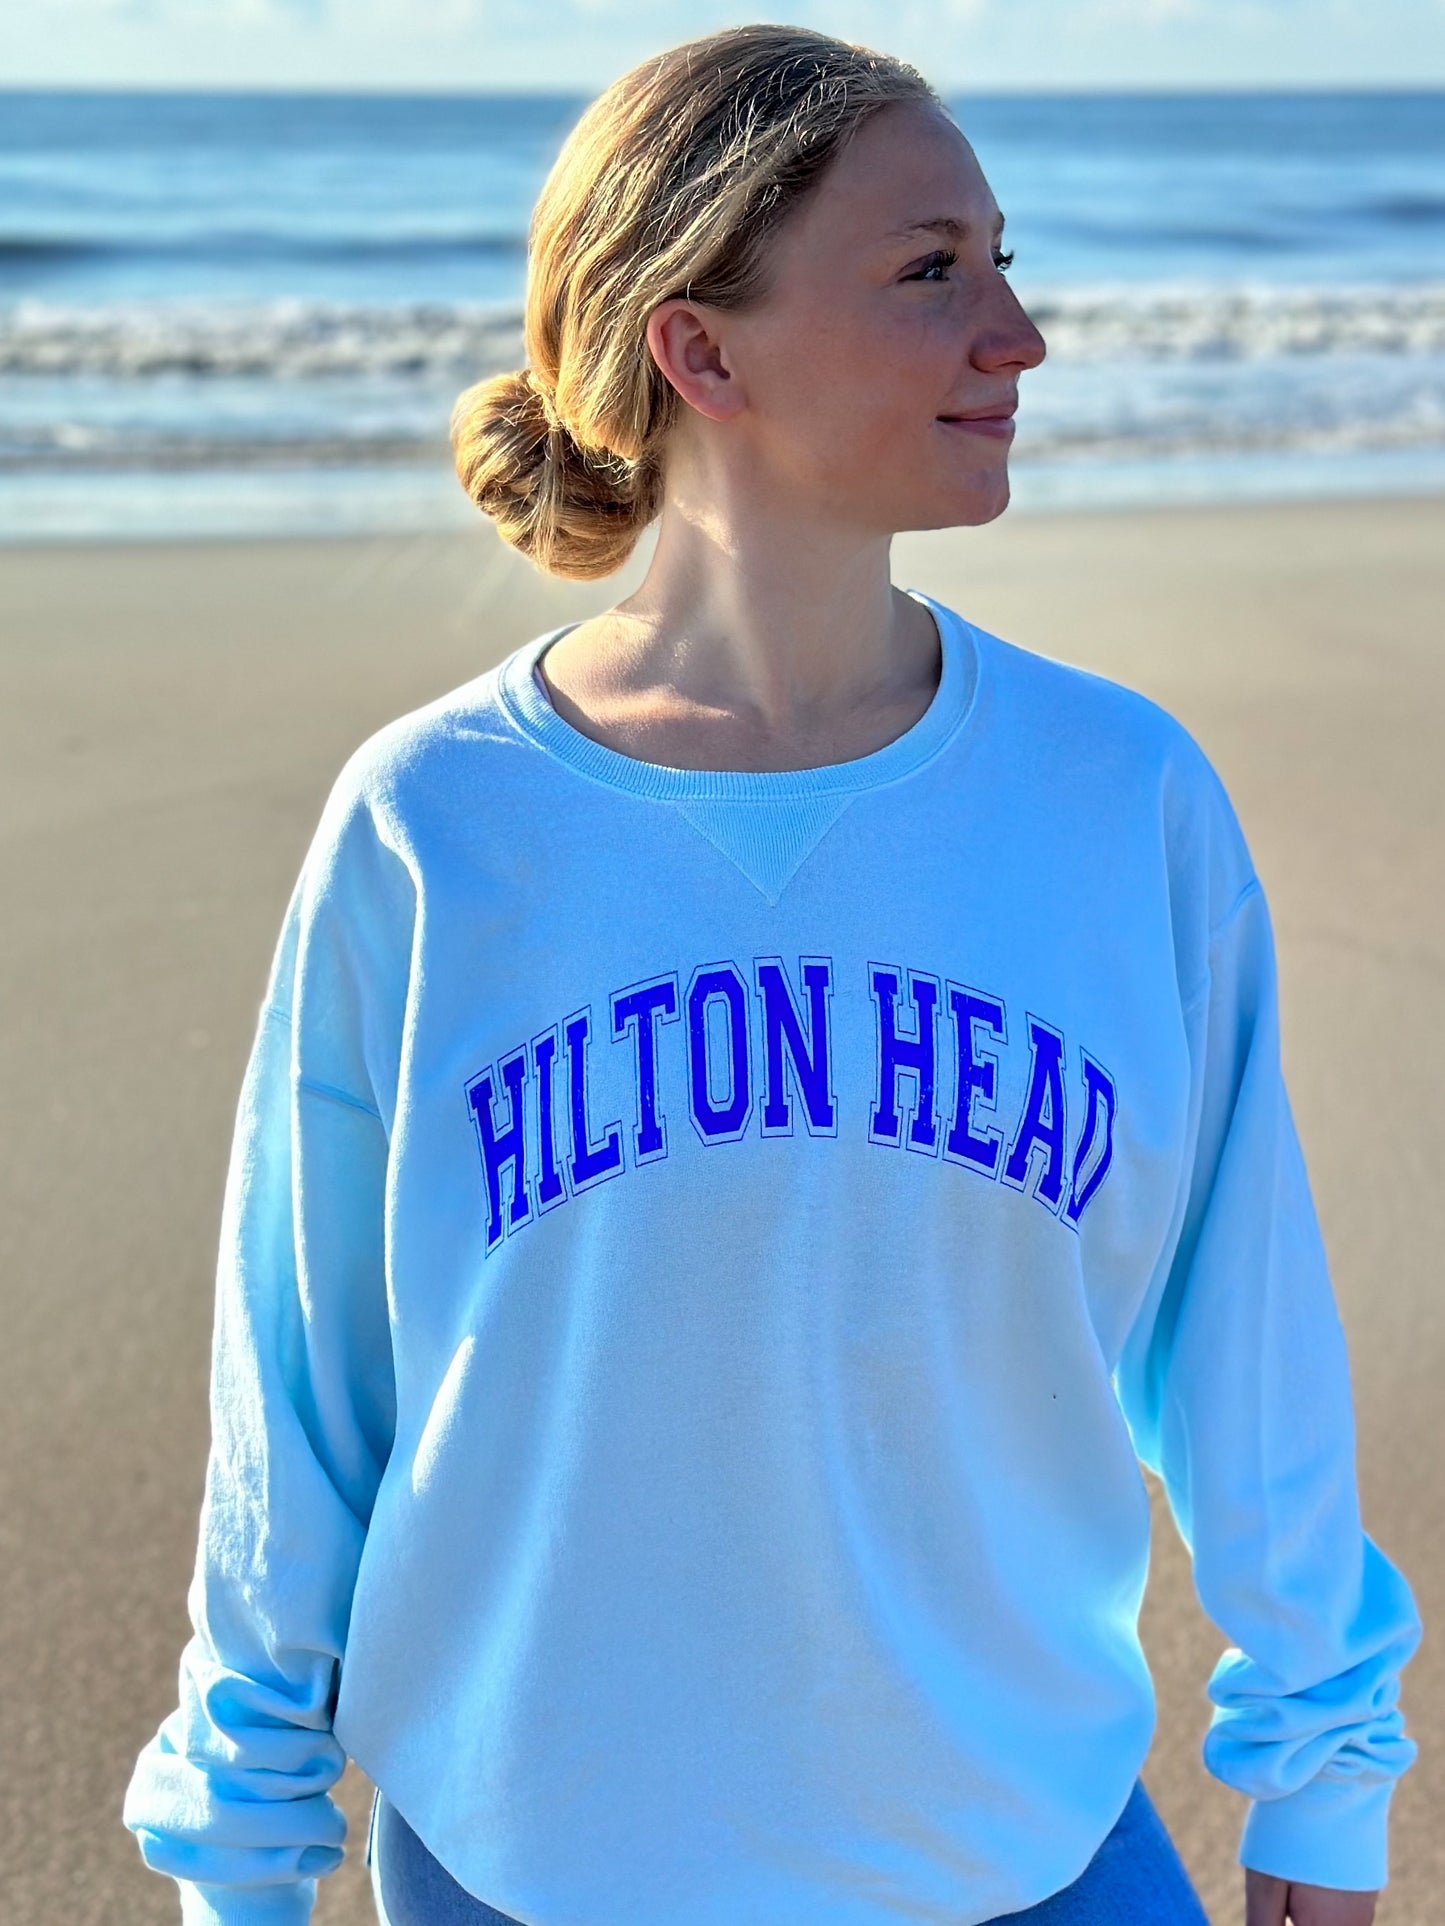 Hilton Head Crew